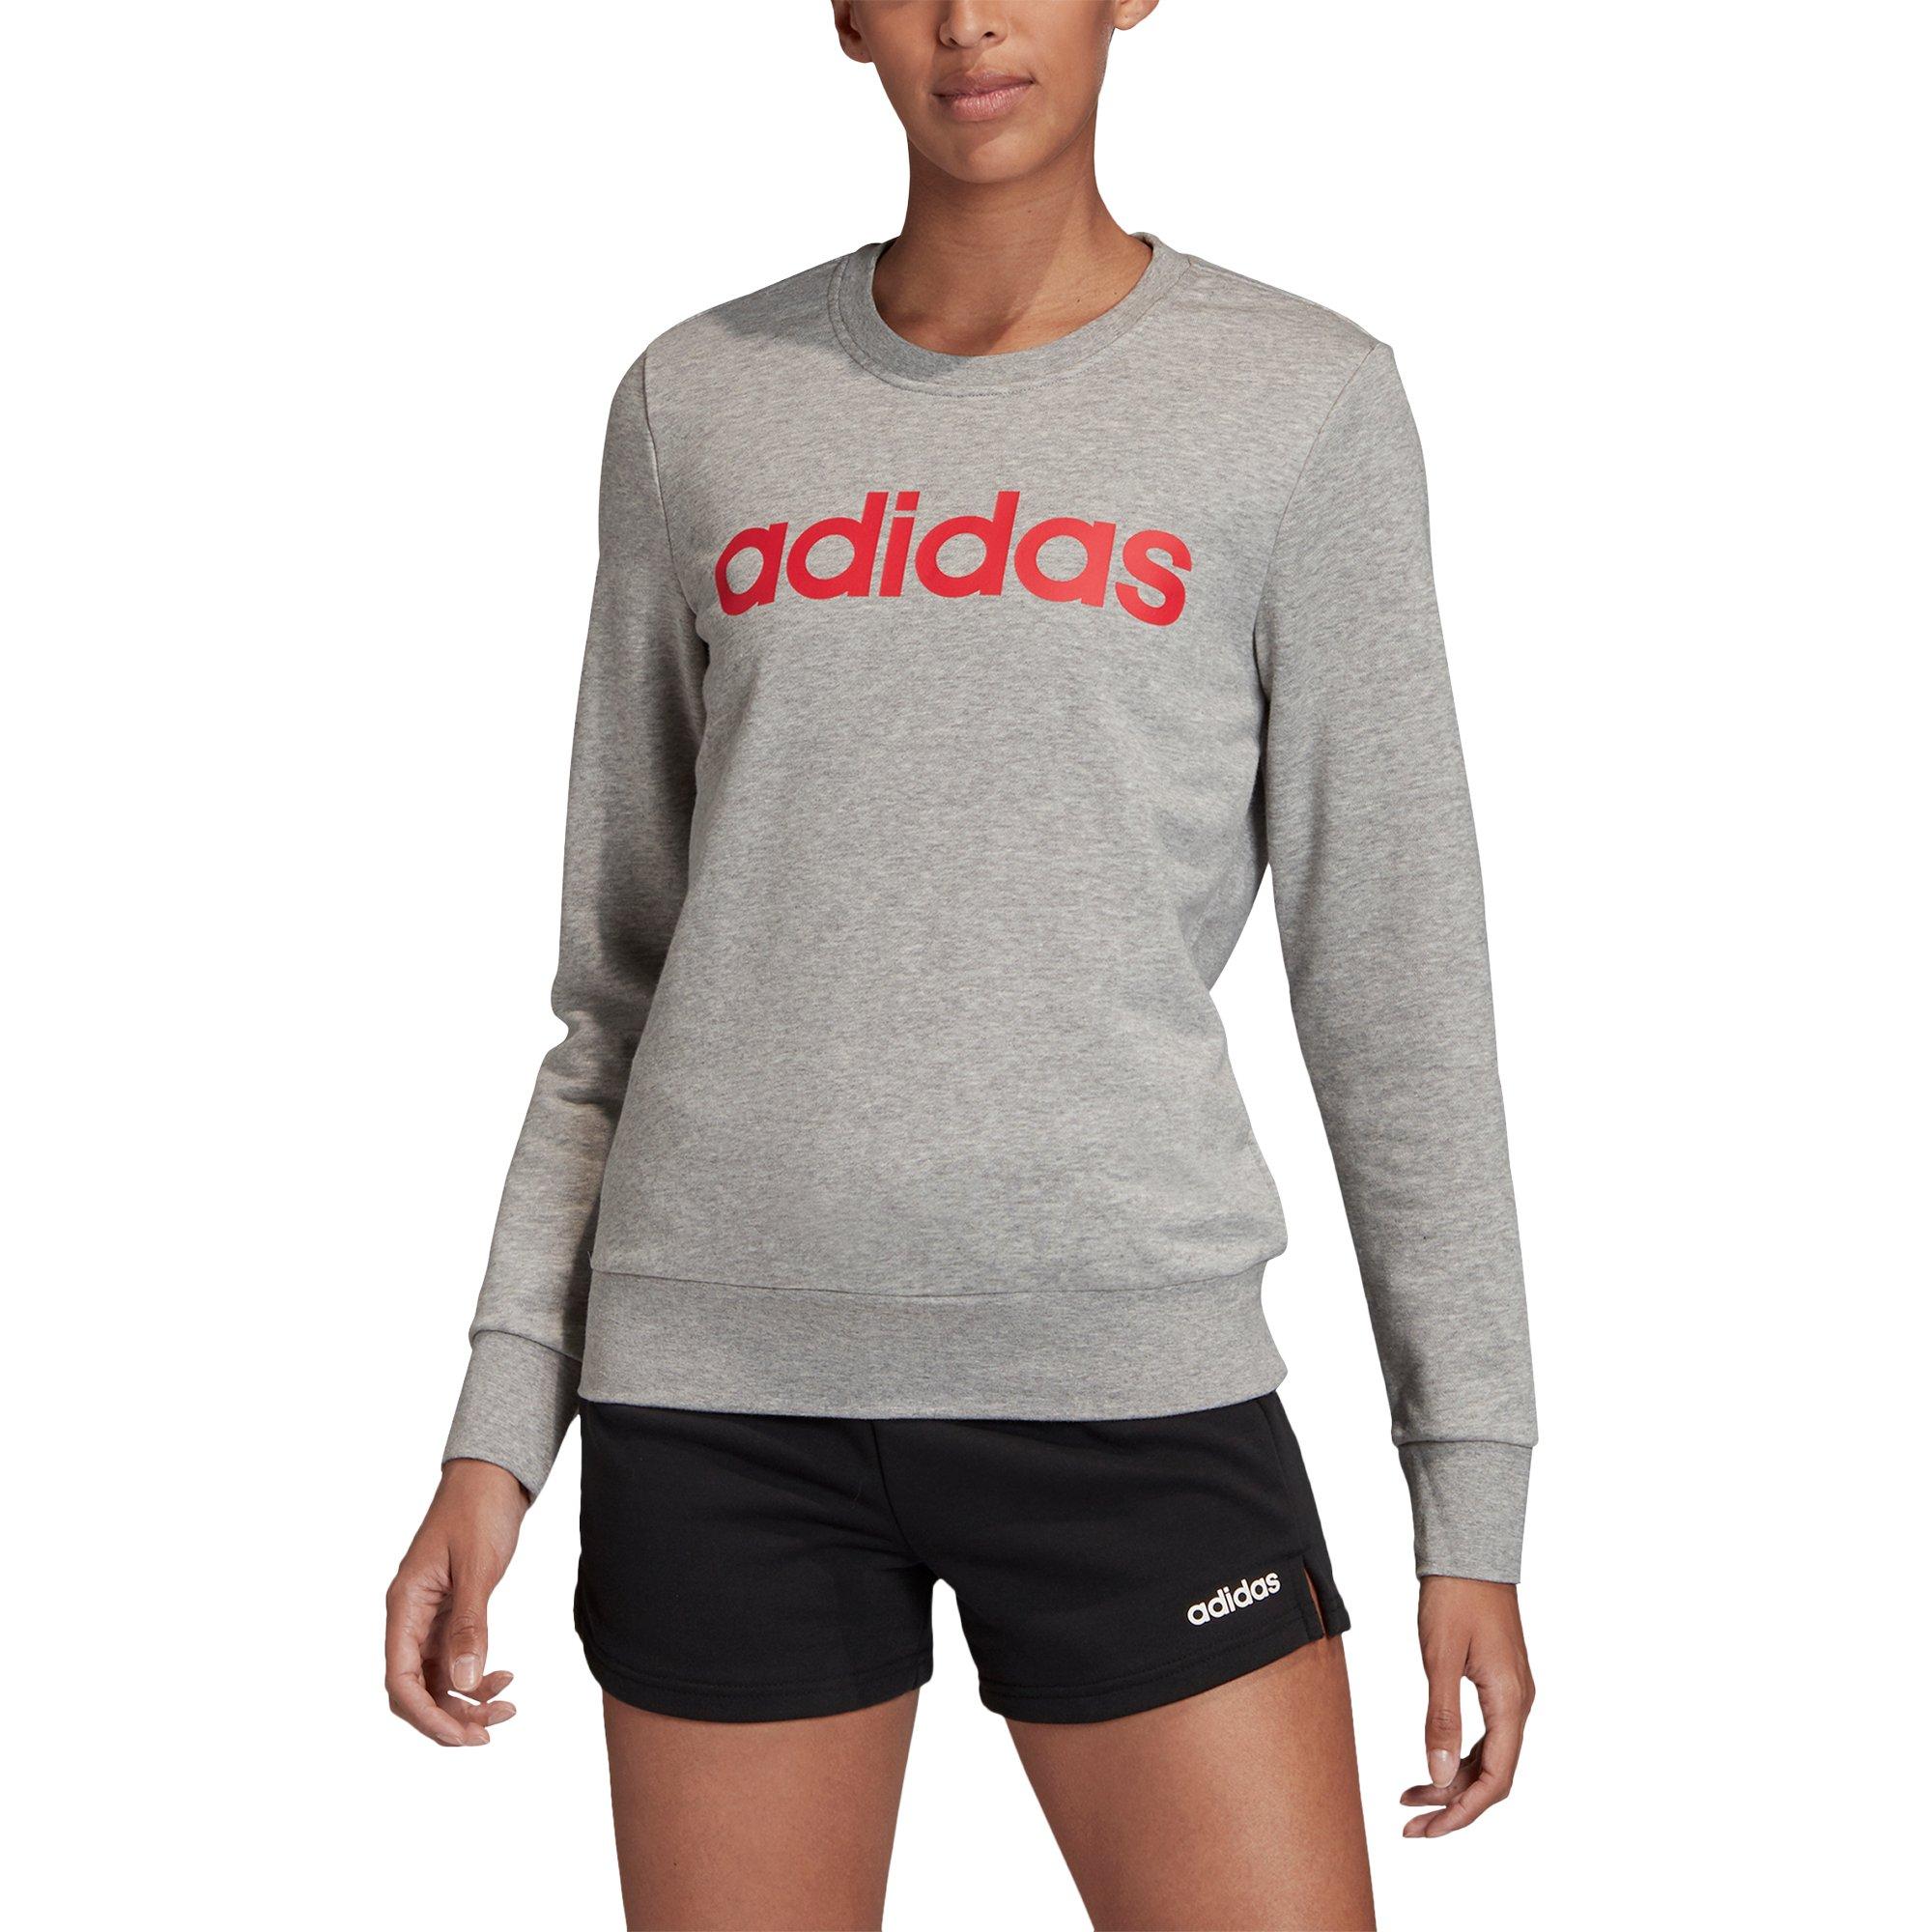 adidas women's essentials linear sweatshirt